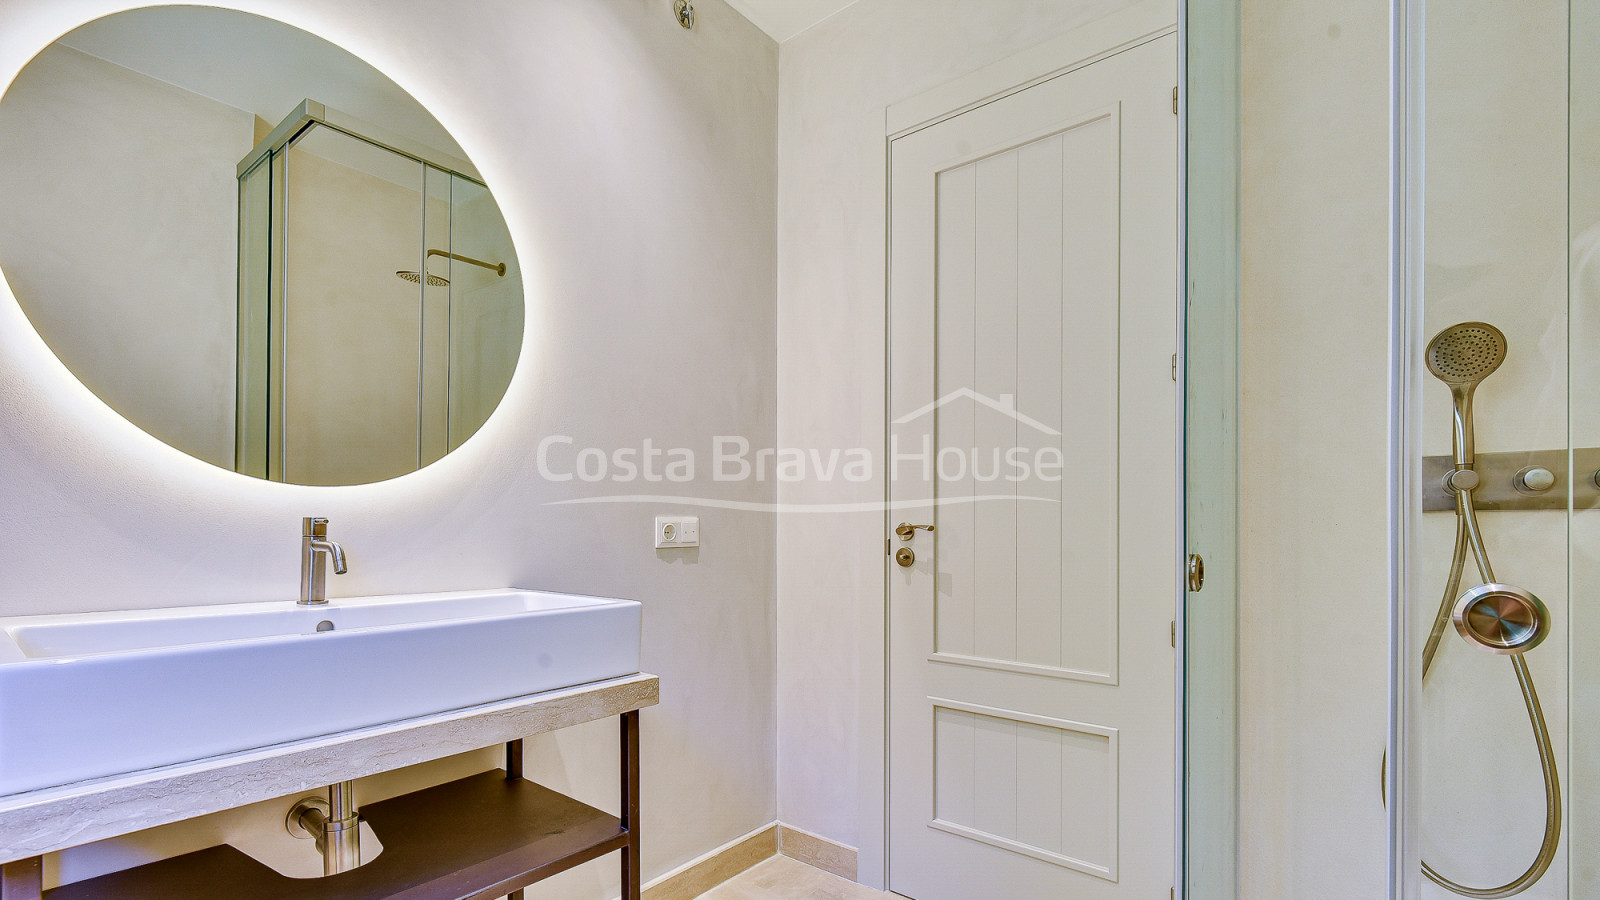 Exclusive luxury villa in Aiguablava, Begur, Costa Brava